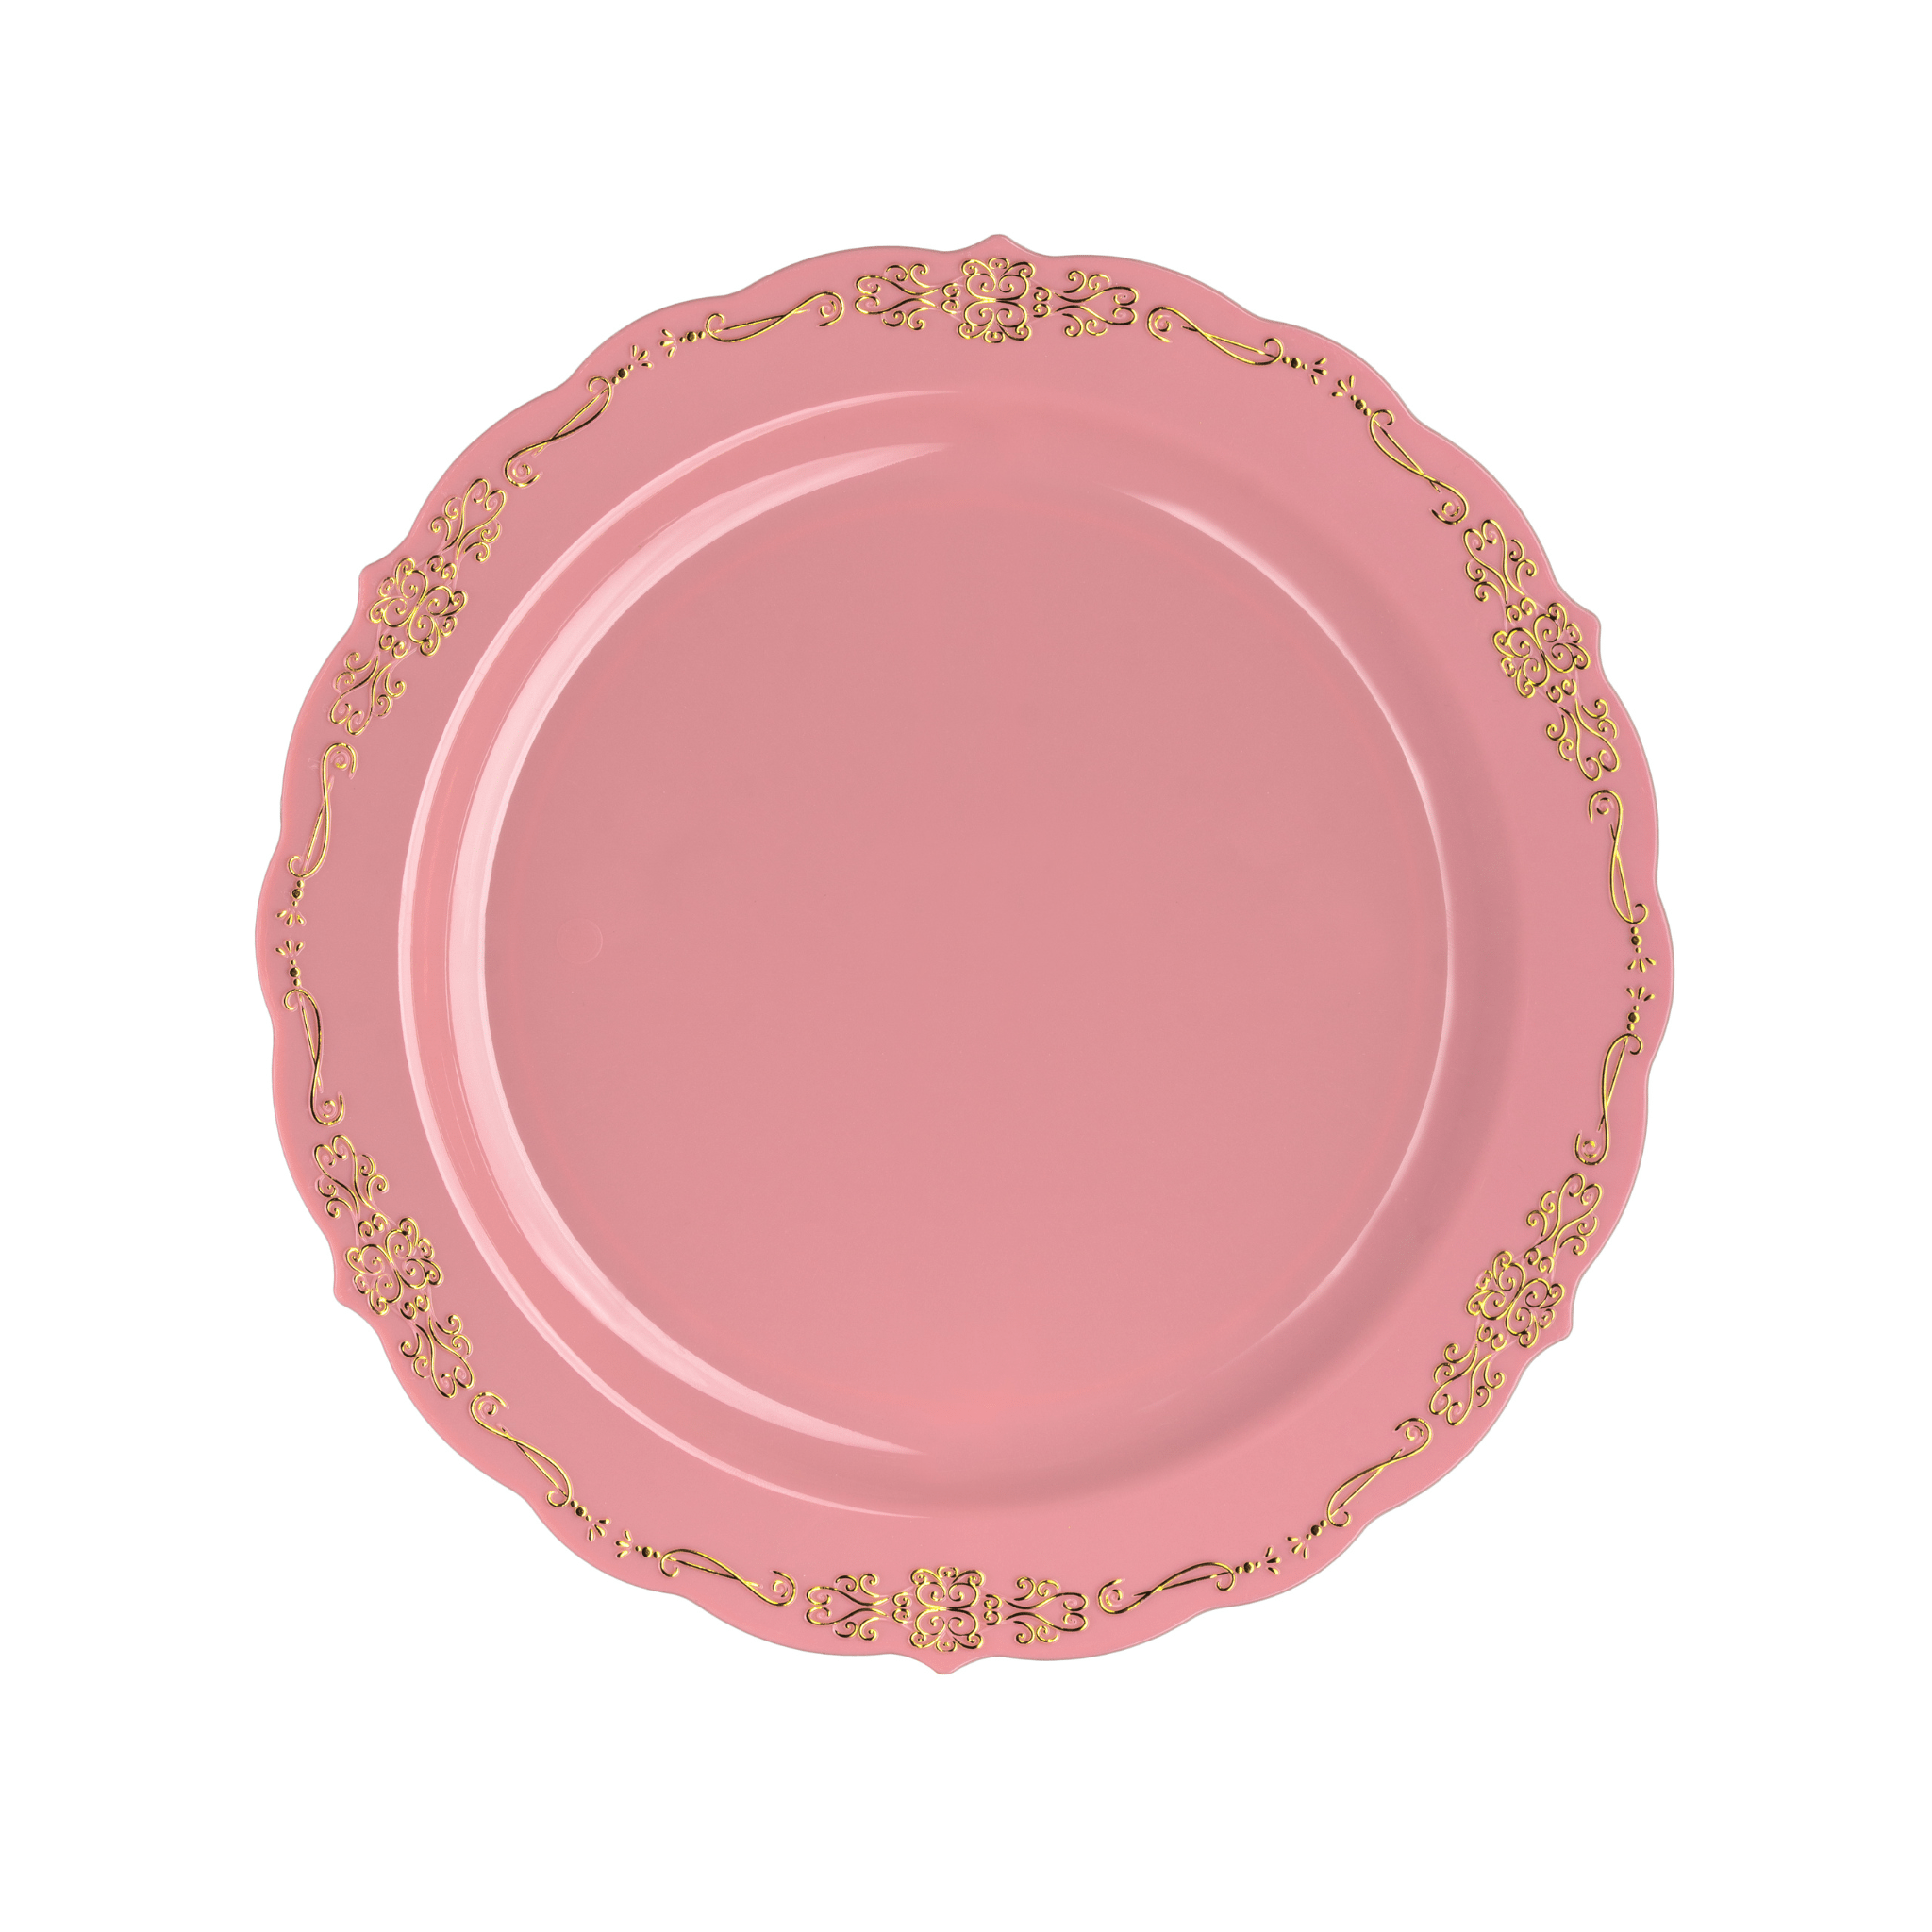 9" Coral / Gold Victorian Design Plastic Plates (120 Count)